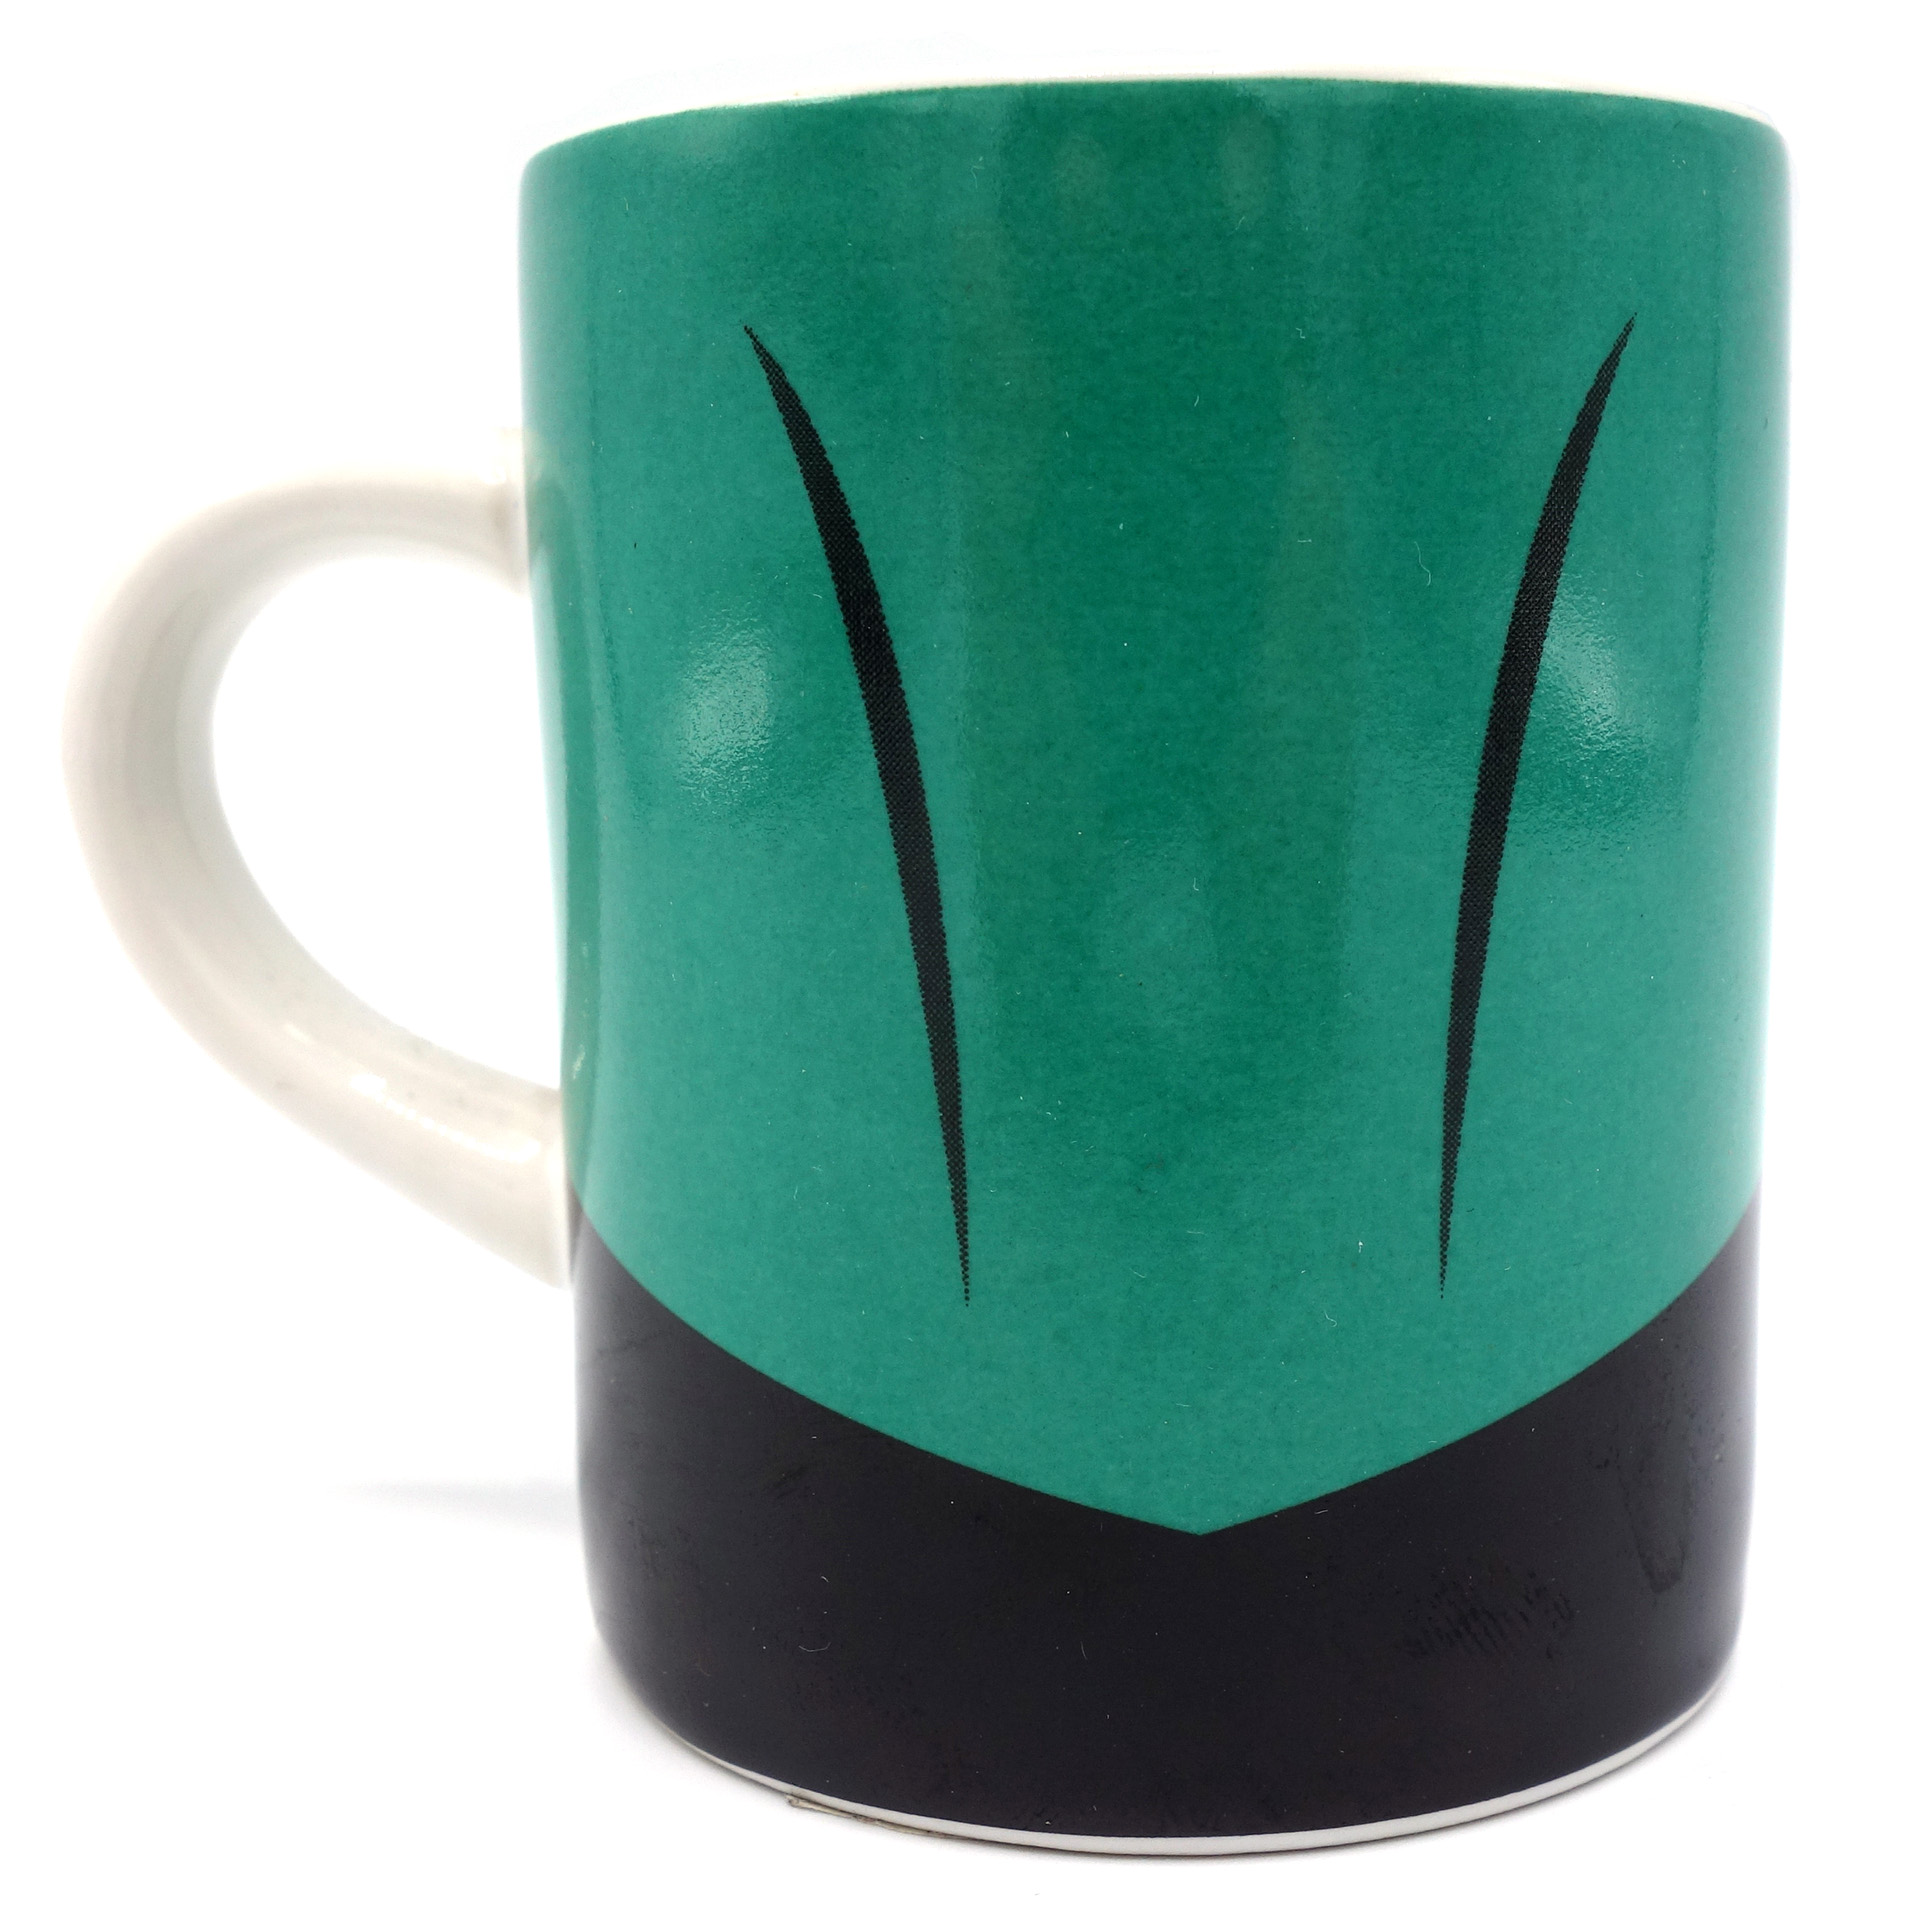 Green Lantern Mini Mug